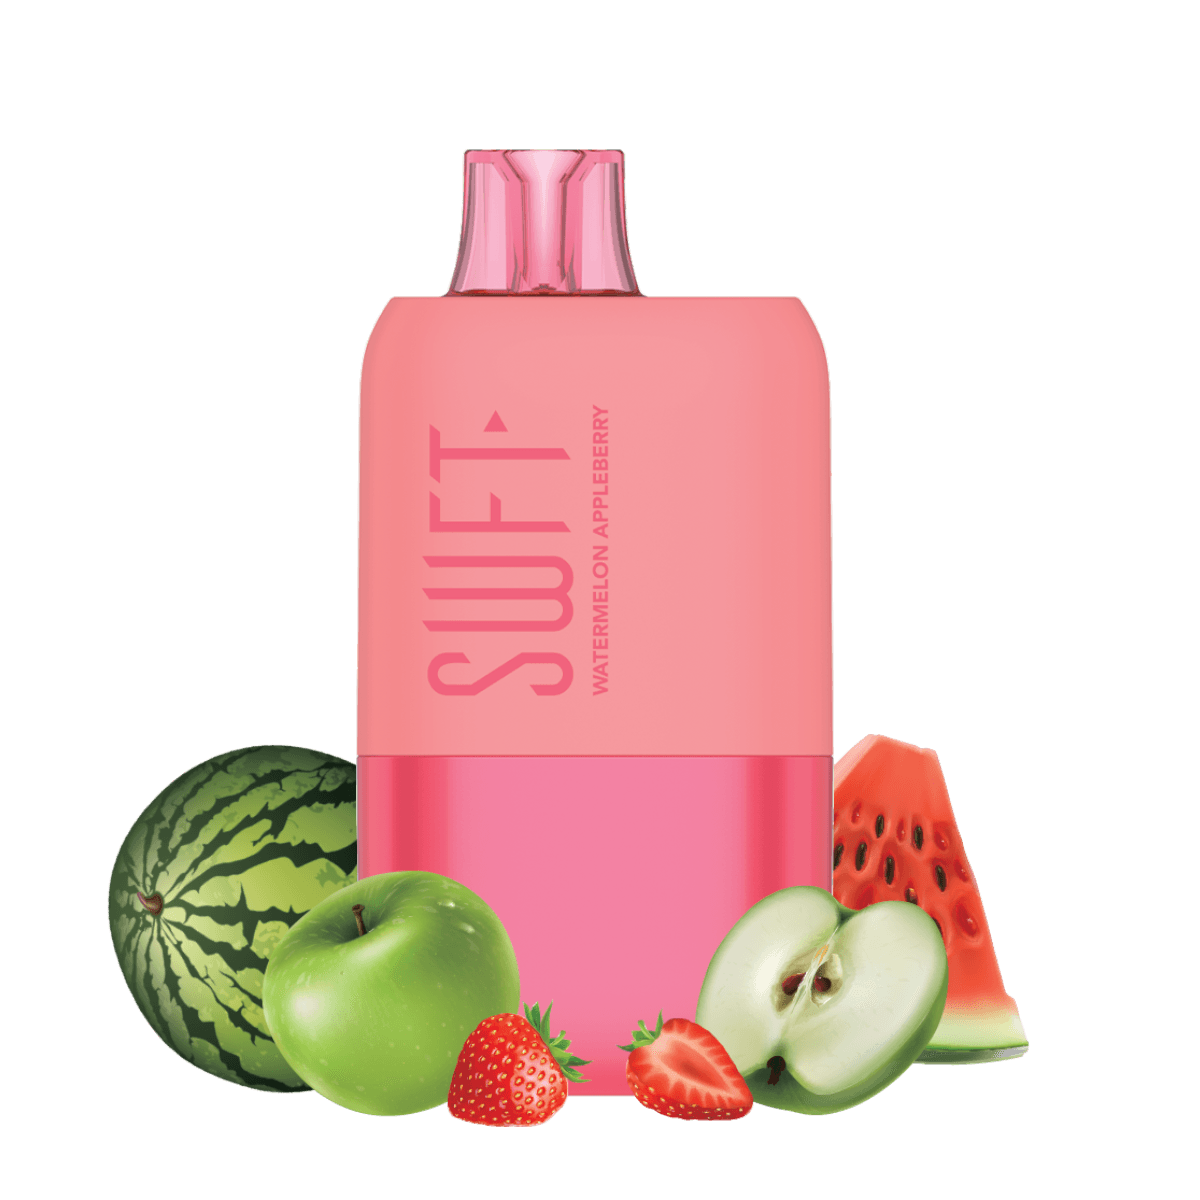 SWFT iCON Disposable Vape Watermelon Appleberry  